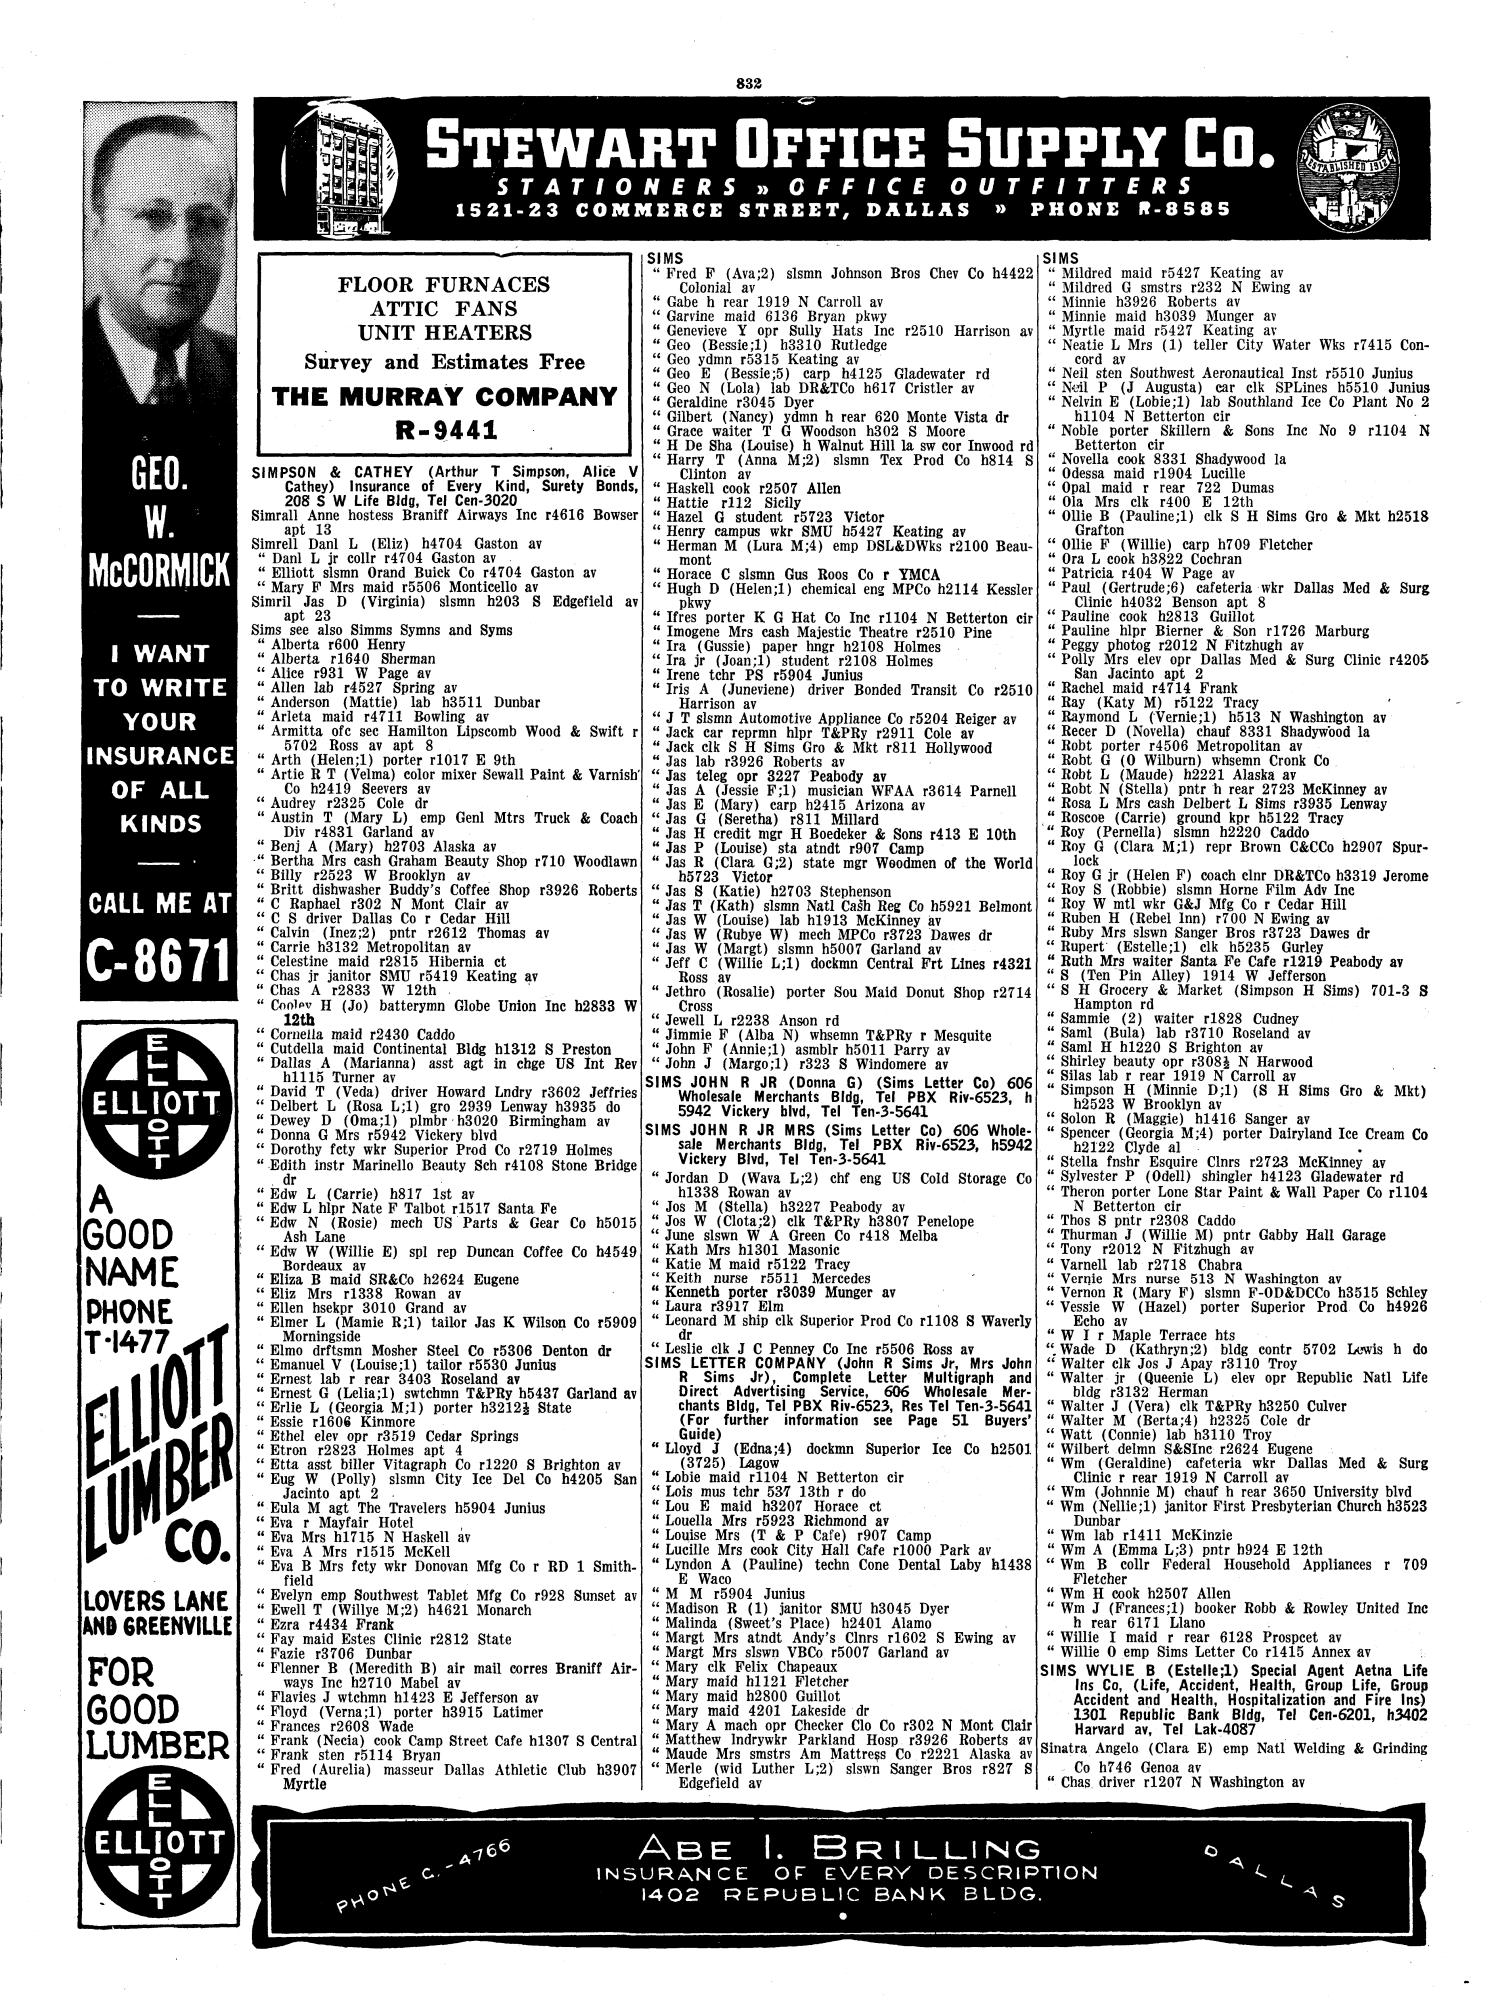 Dallas City Directory, 1941
                                                
                                                    832
                                                